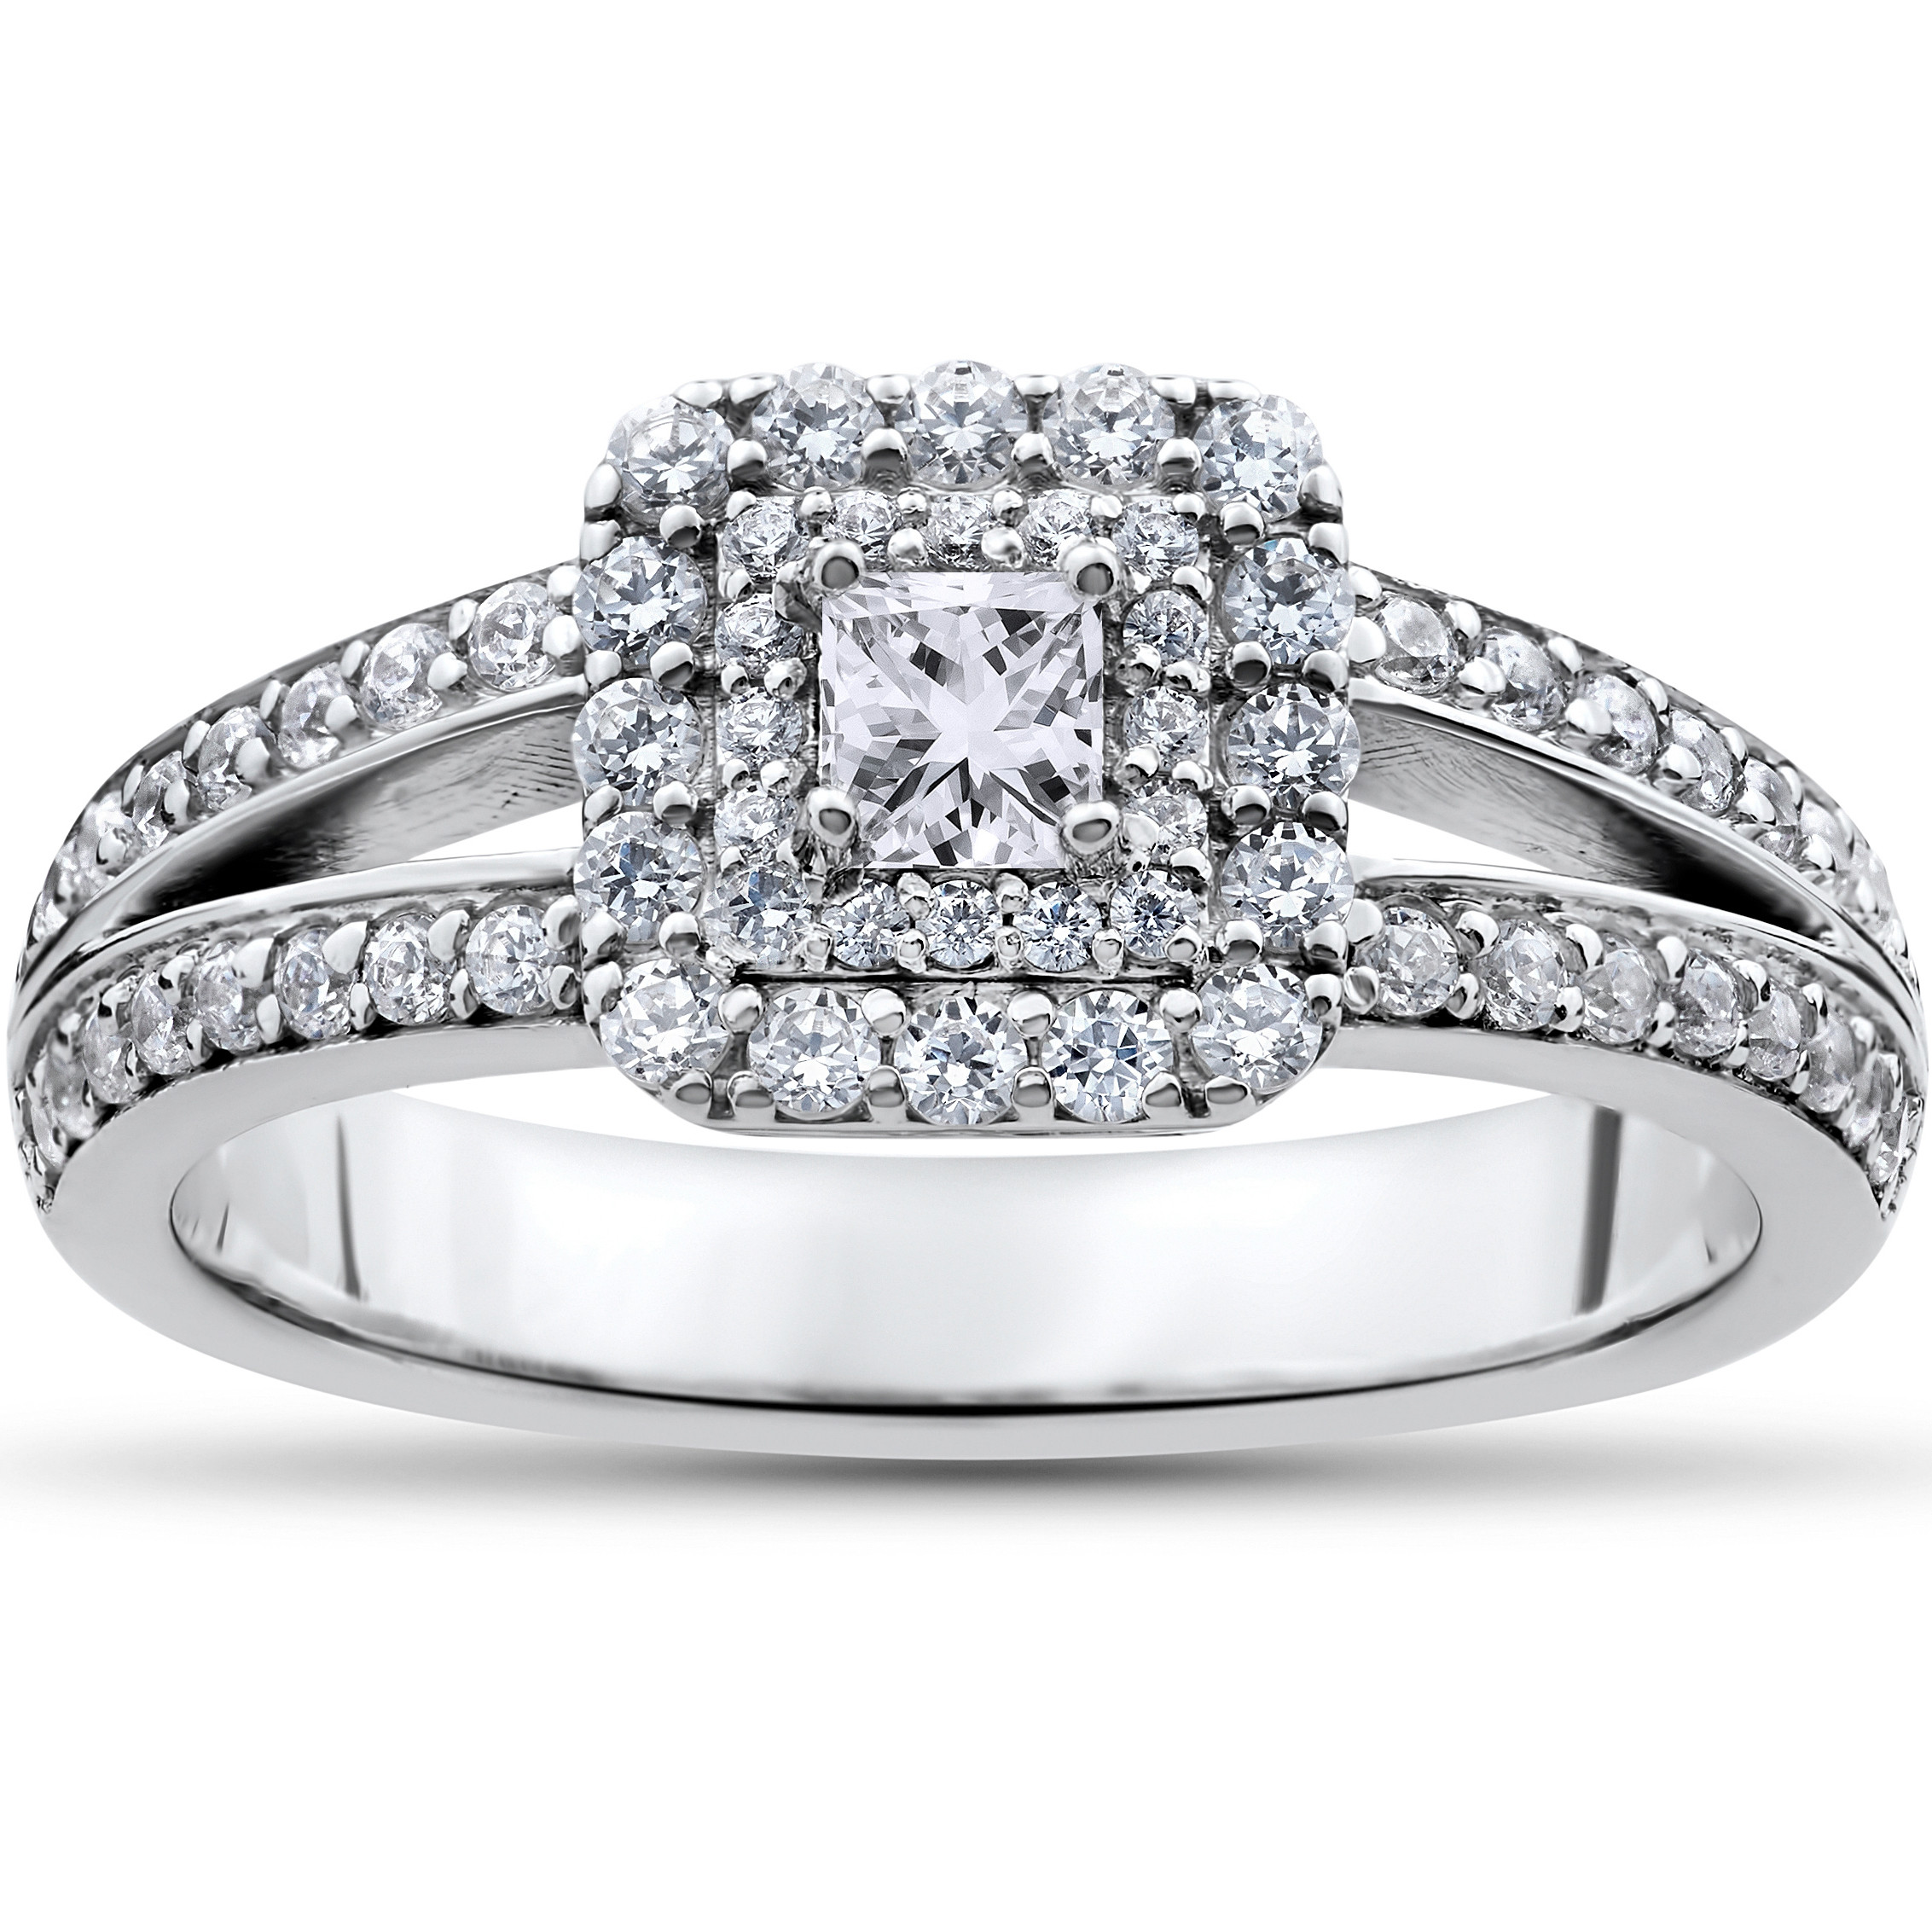 Halo Princess Cut Engagement Rings
 1 ct Princess Cut Diamond Double Halo Engagement Ring 14k